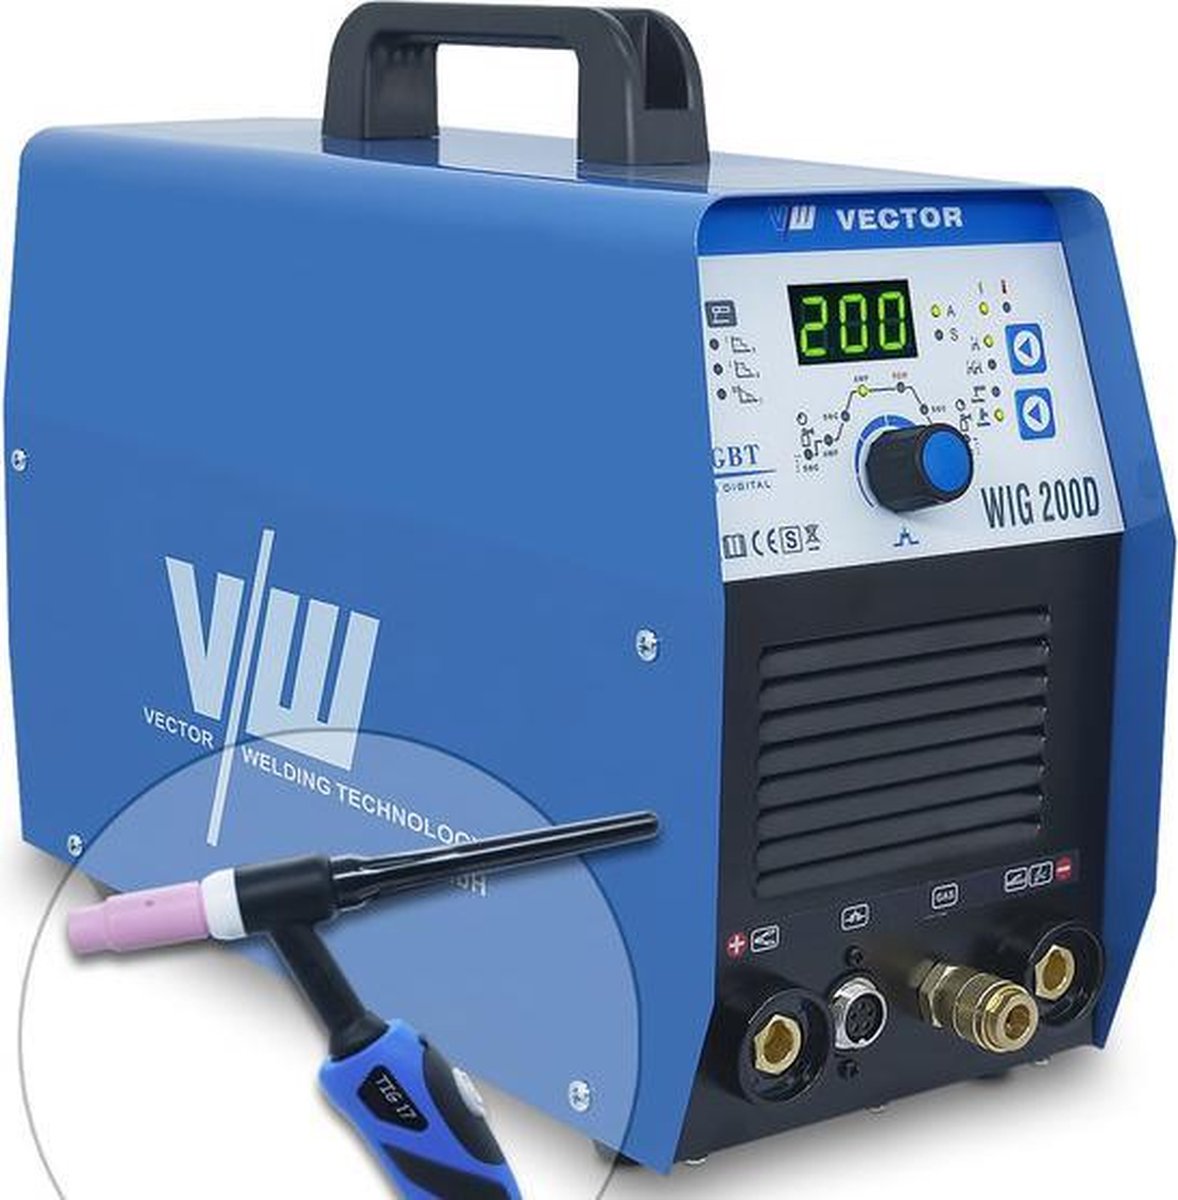 Machine à souder Vector TIG et électrode | DC TIG 200 IGBT | Allumage HF |  bol.com